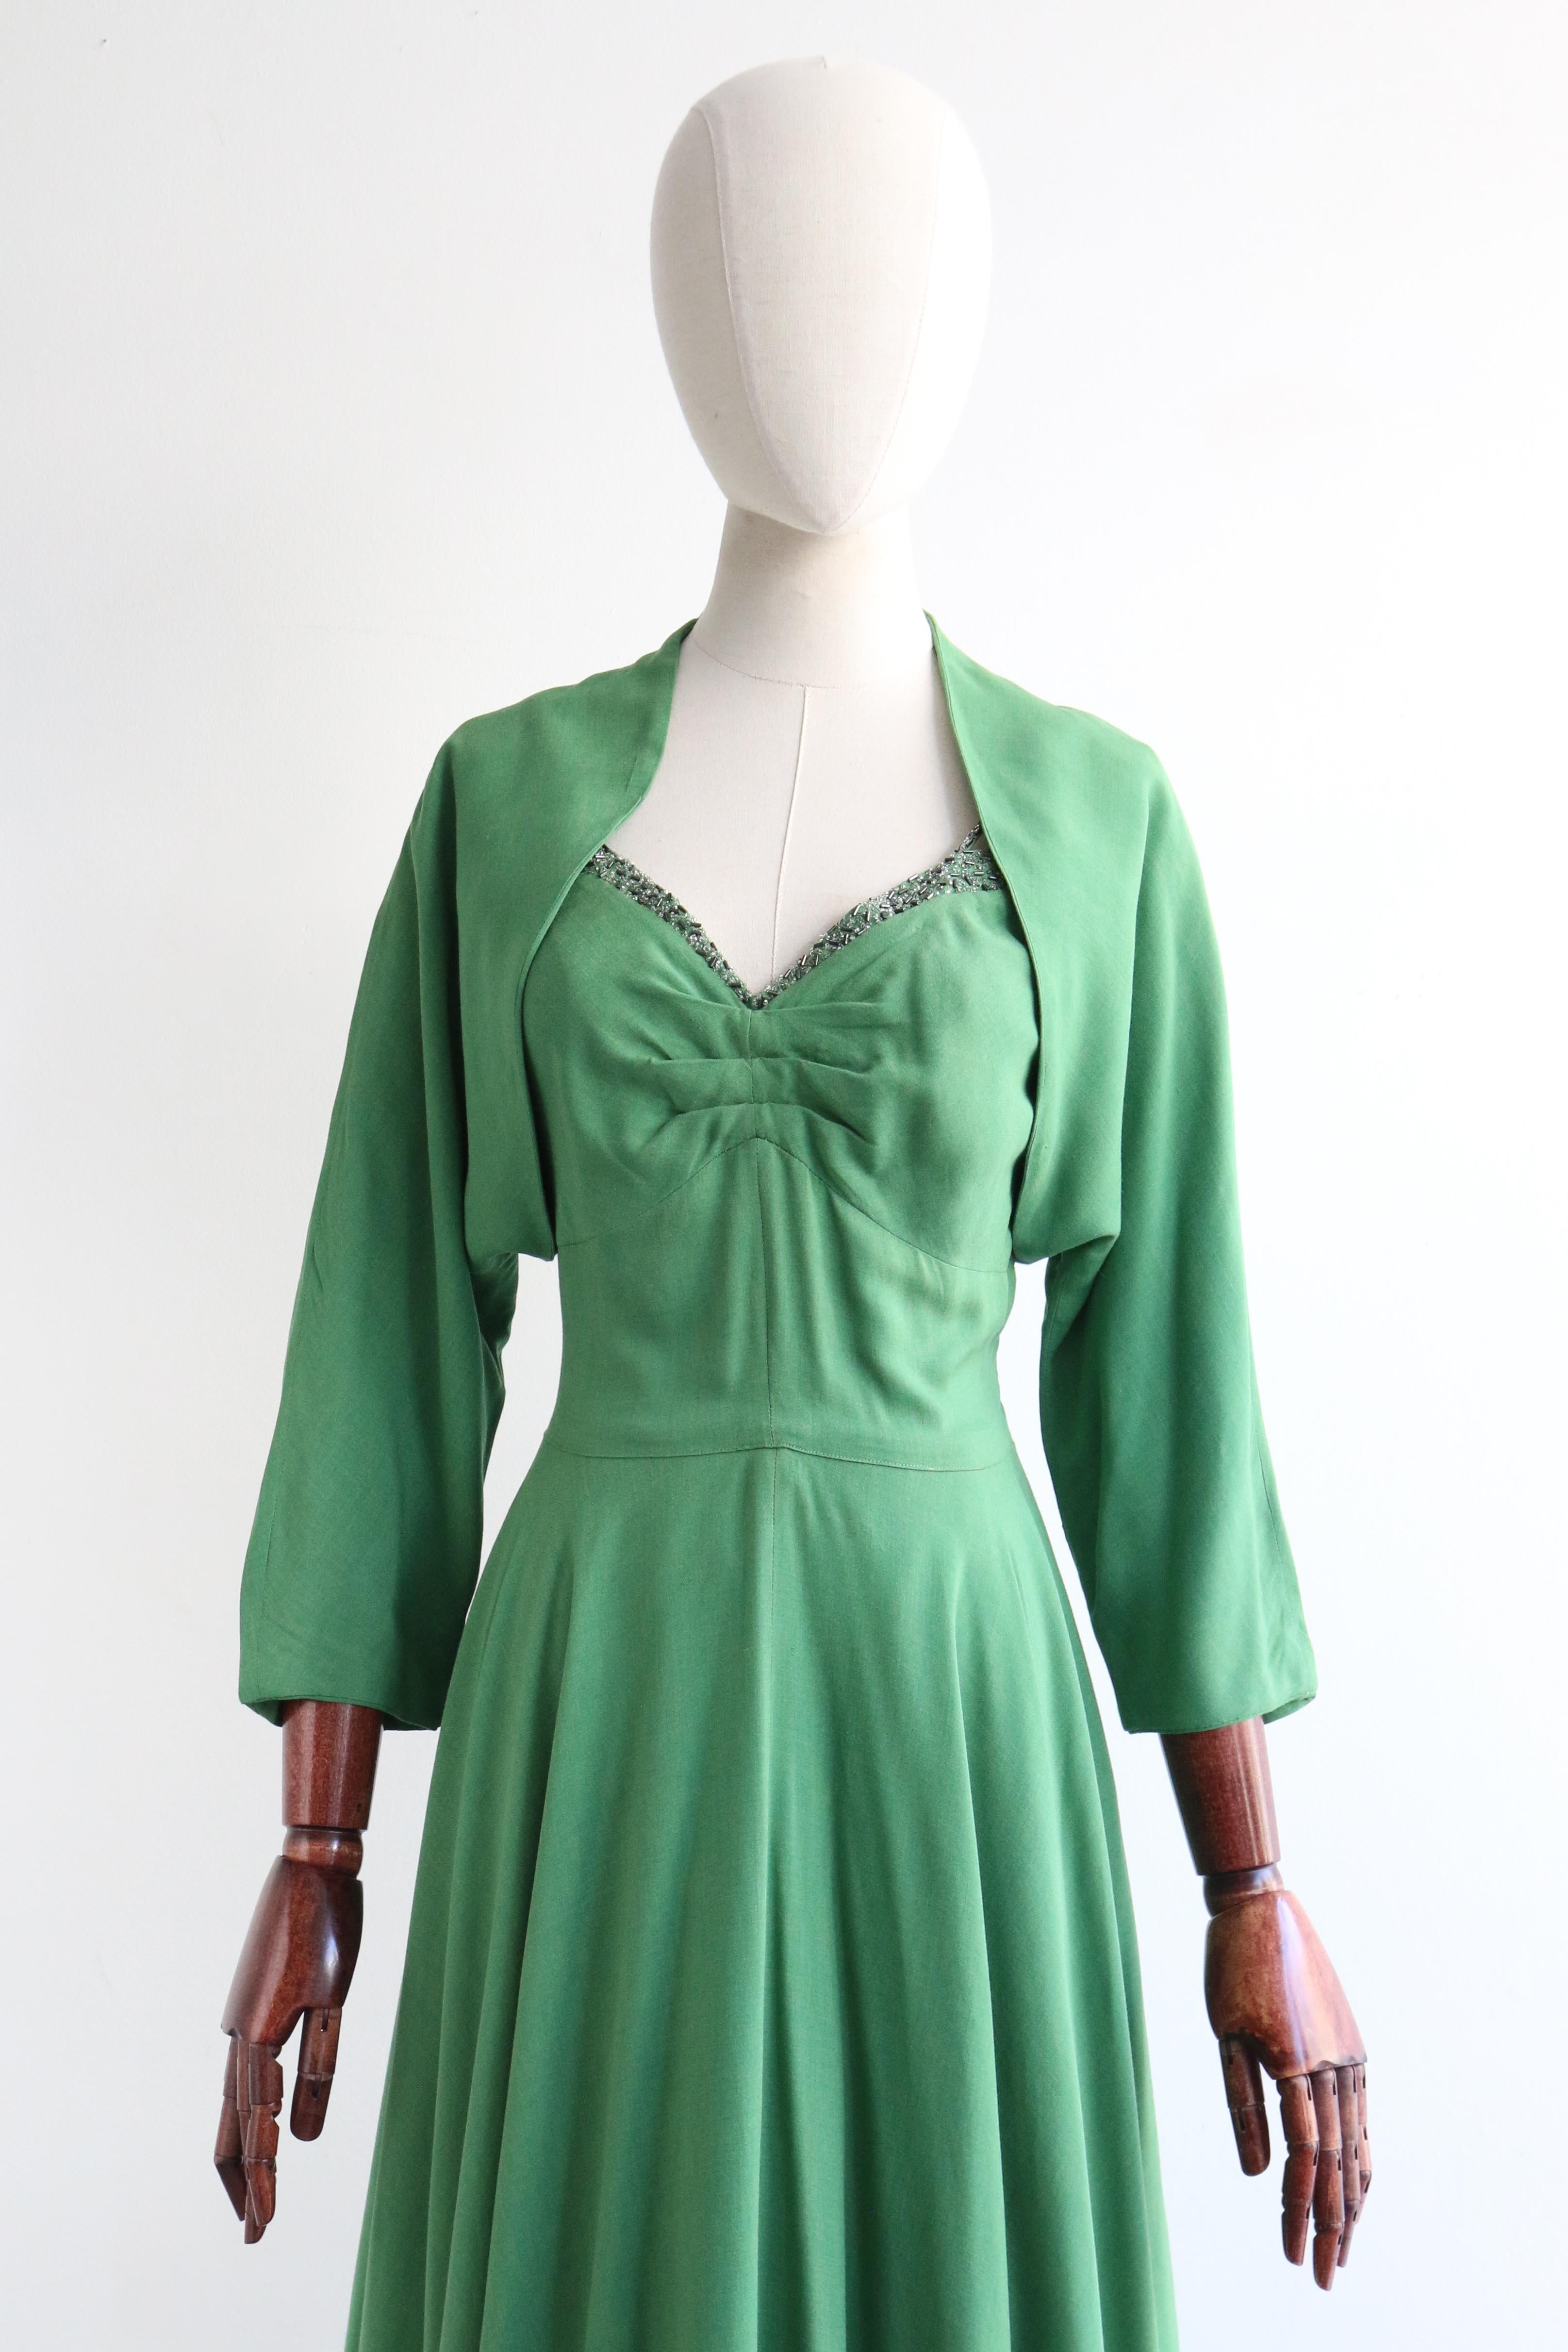 Vintage 1950's Jade Green Bead Embellished Evening Dress & Bolero UK 12 US 8 For Sale 6